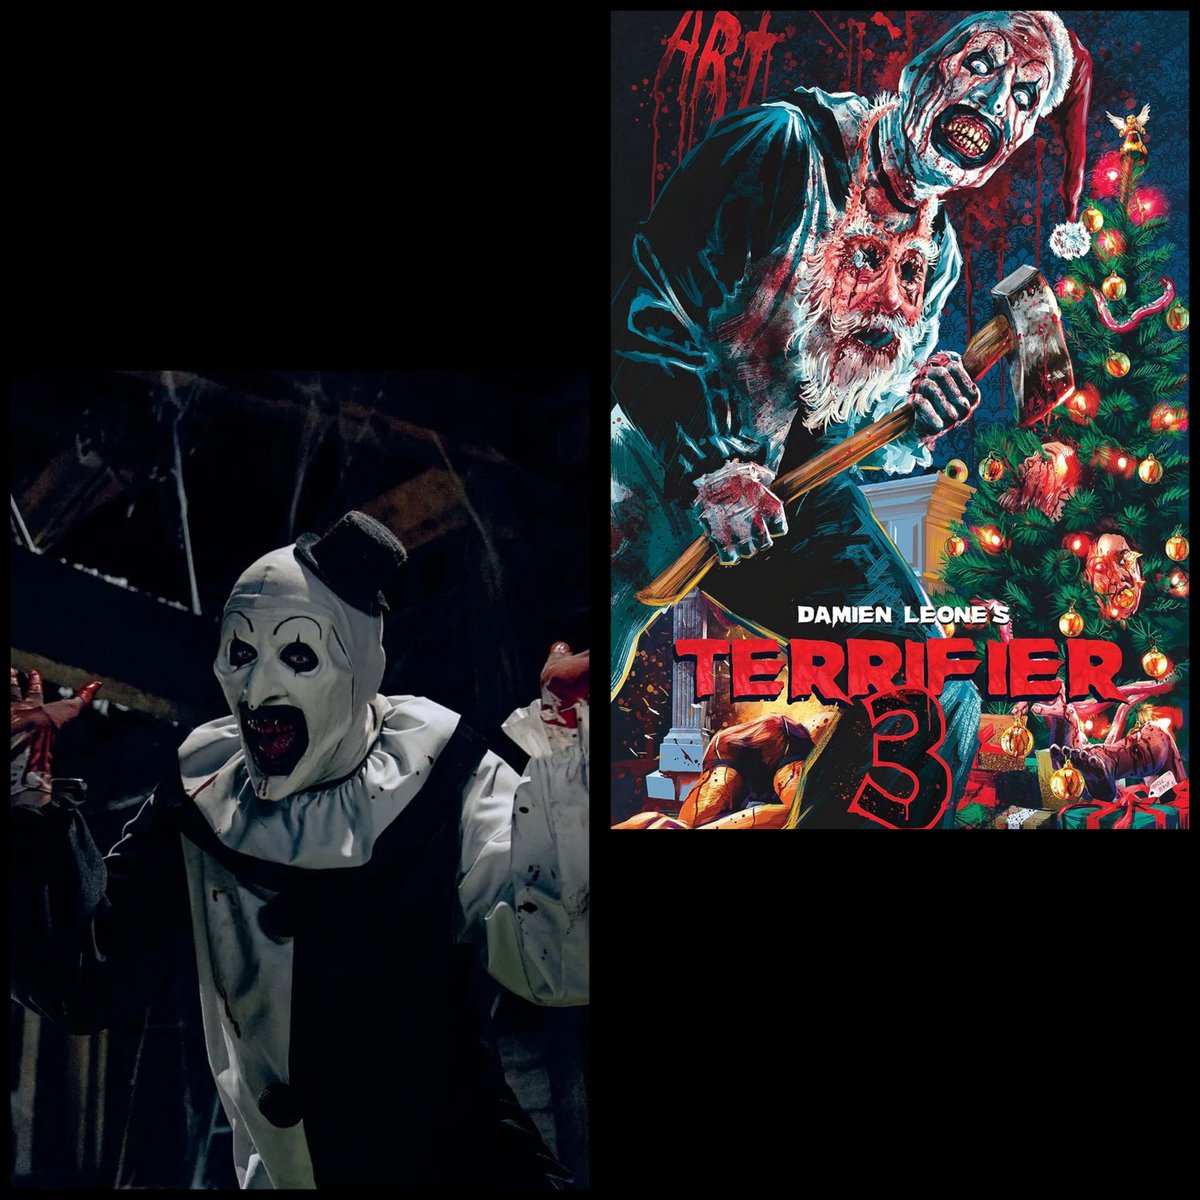 Yo soy fan de #Terrifier y la tercer entrega será de terror navideño muajajjaja #pelicula #Art #clown #sandymoon #gore #disecciontv #próximamente